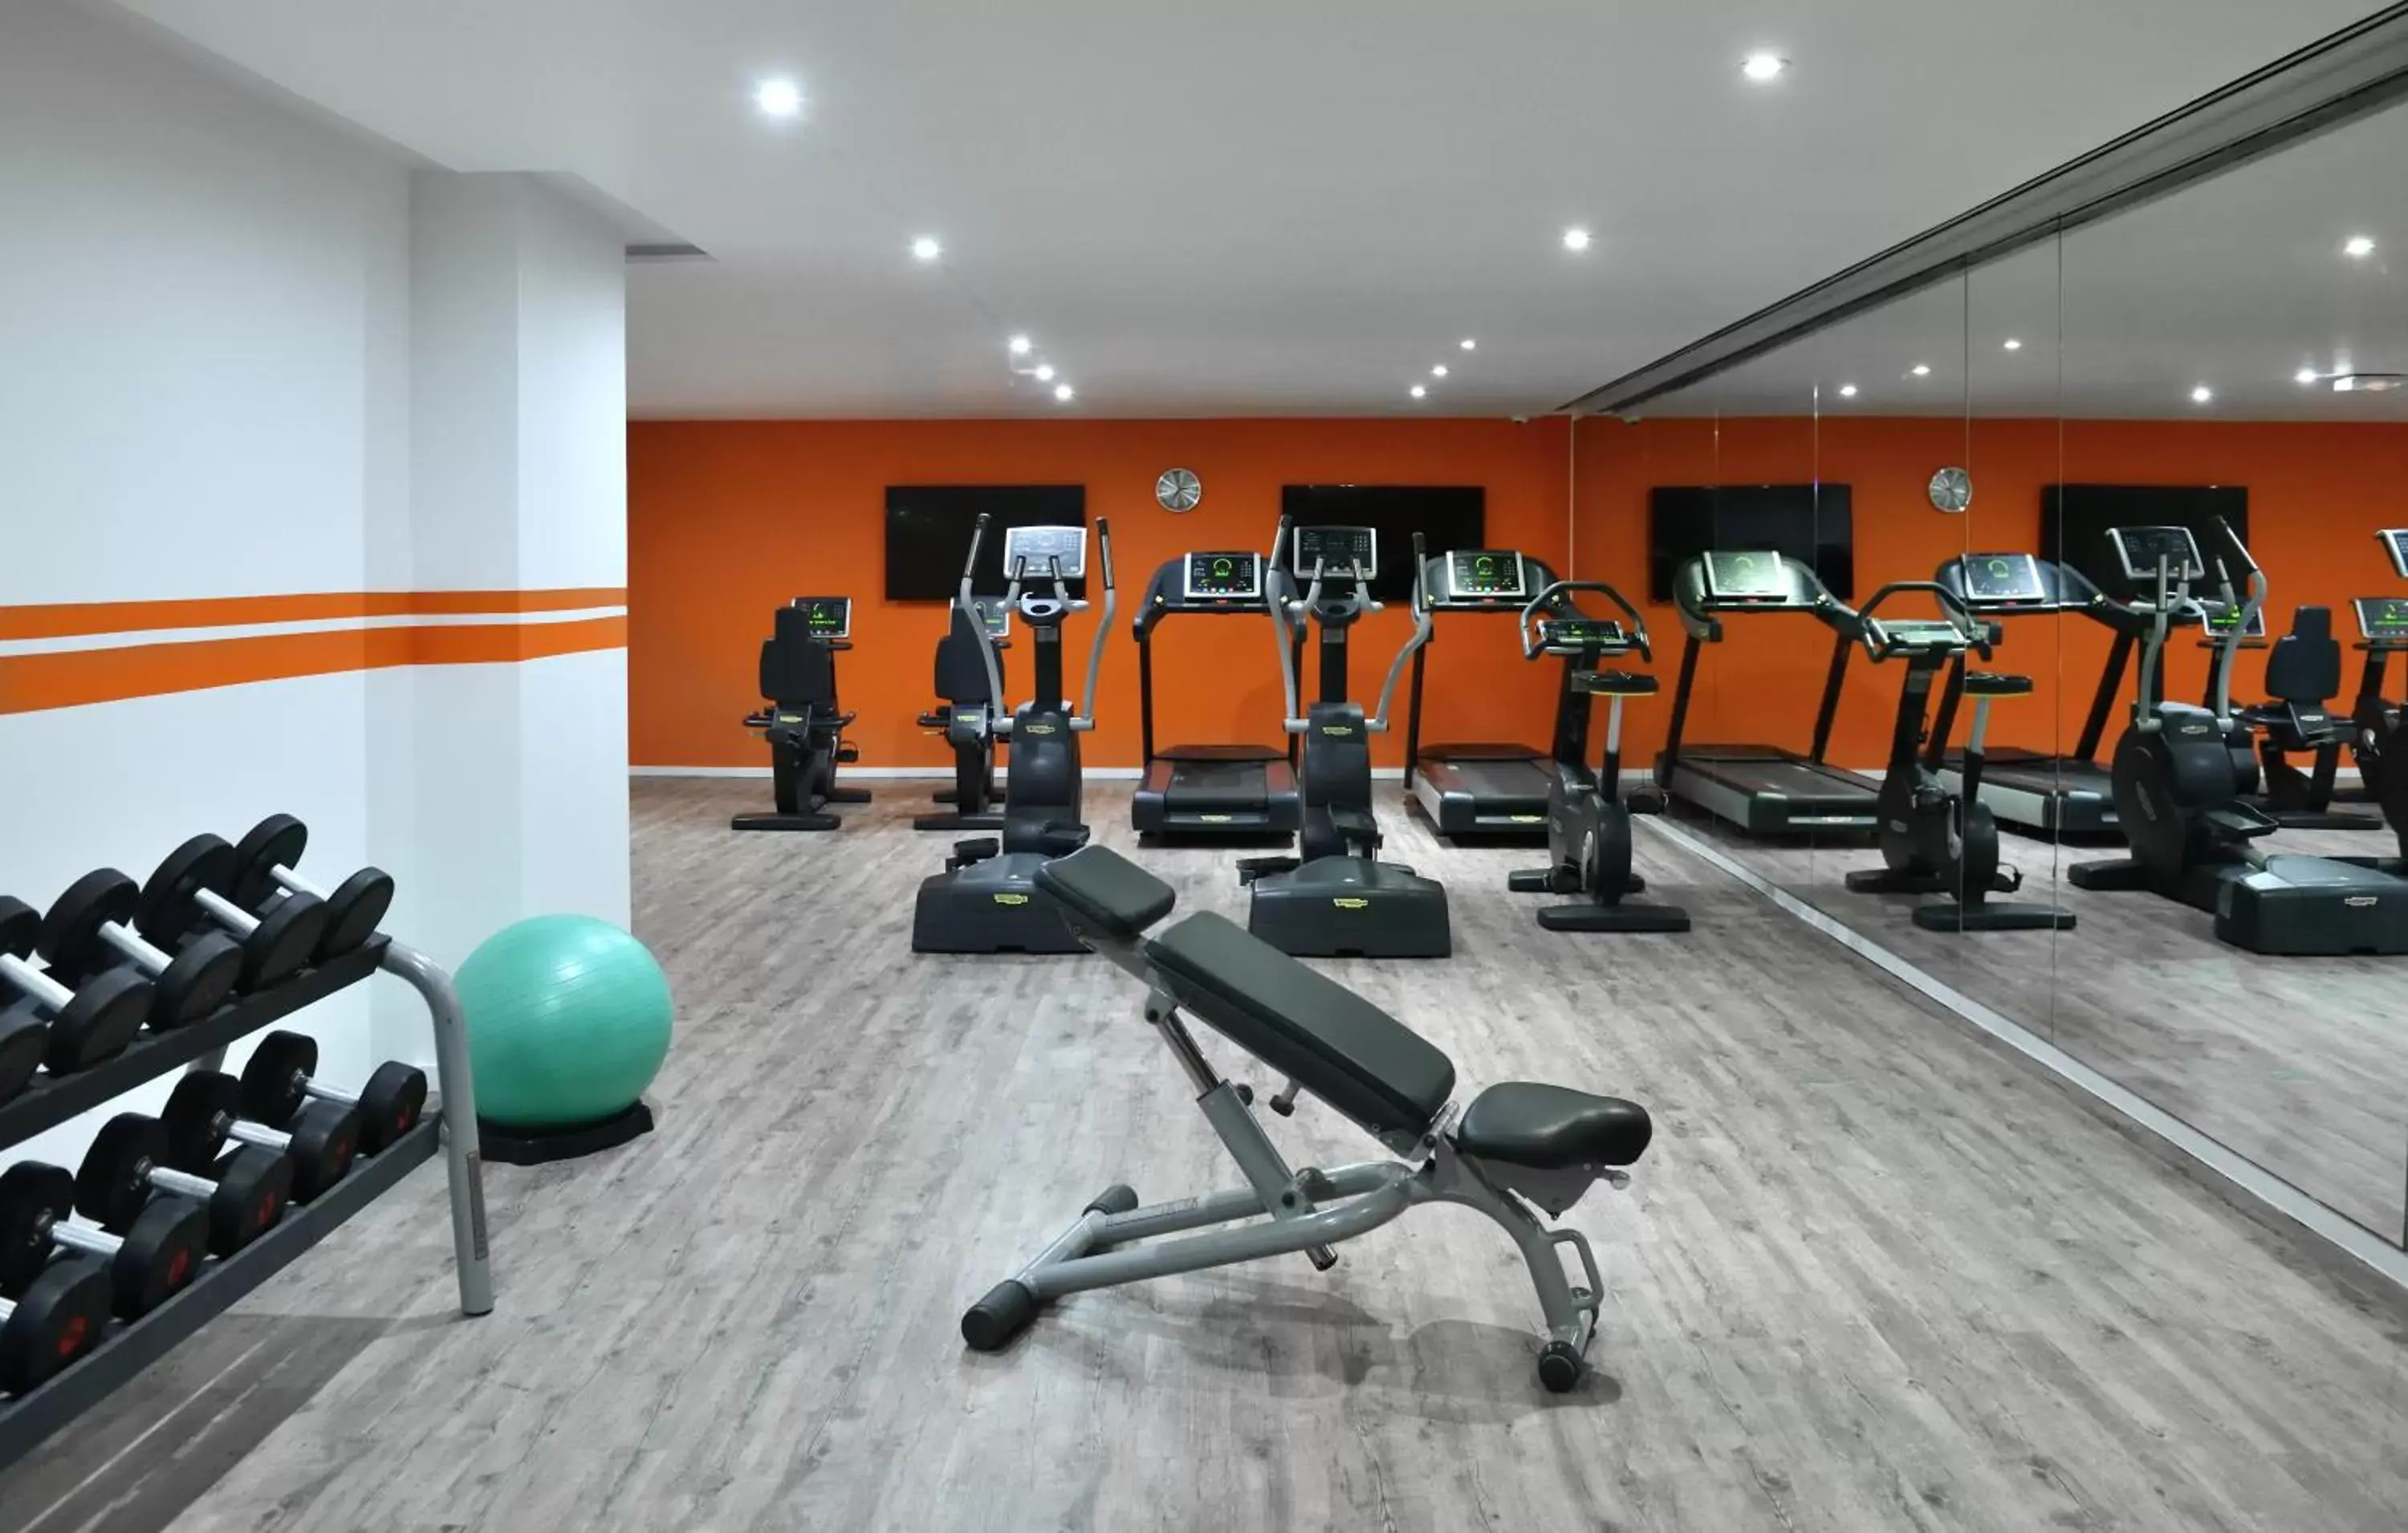 Fitness centre/facilities, Fitness Center/Facilities in Sofitel Abidjan Hotel Ivoire